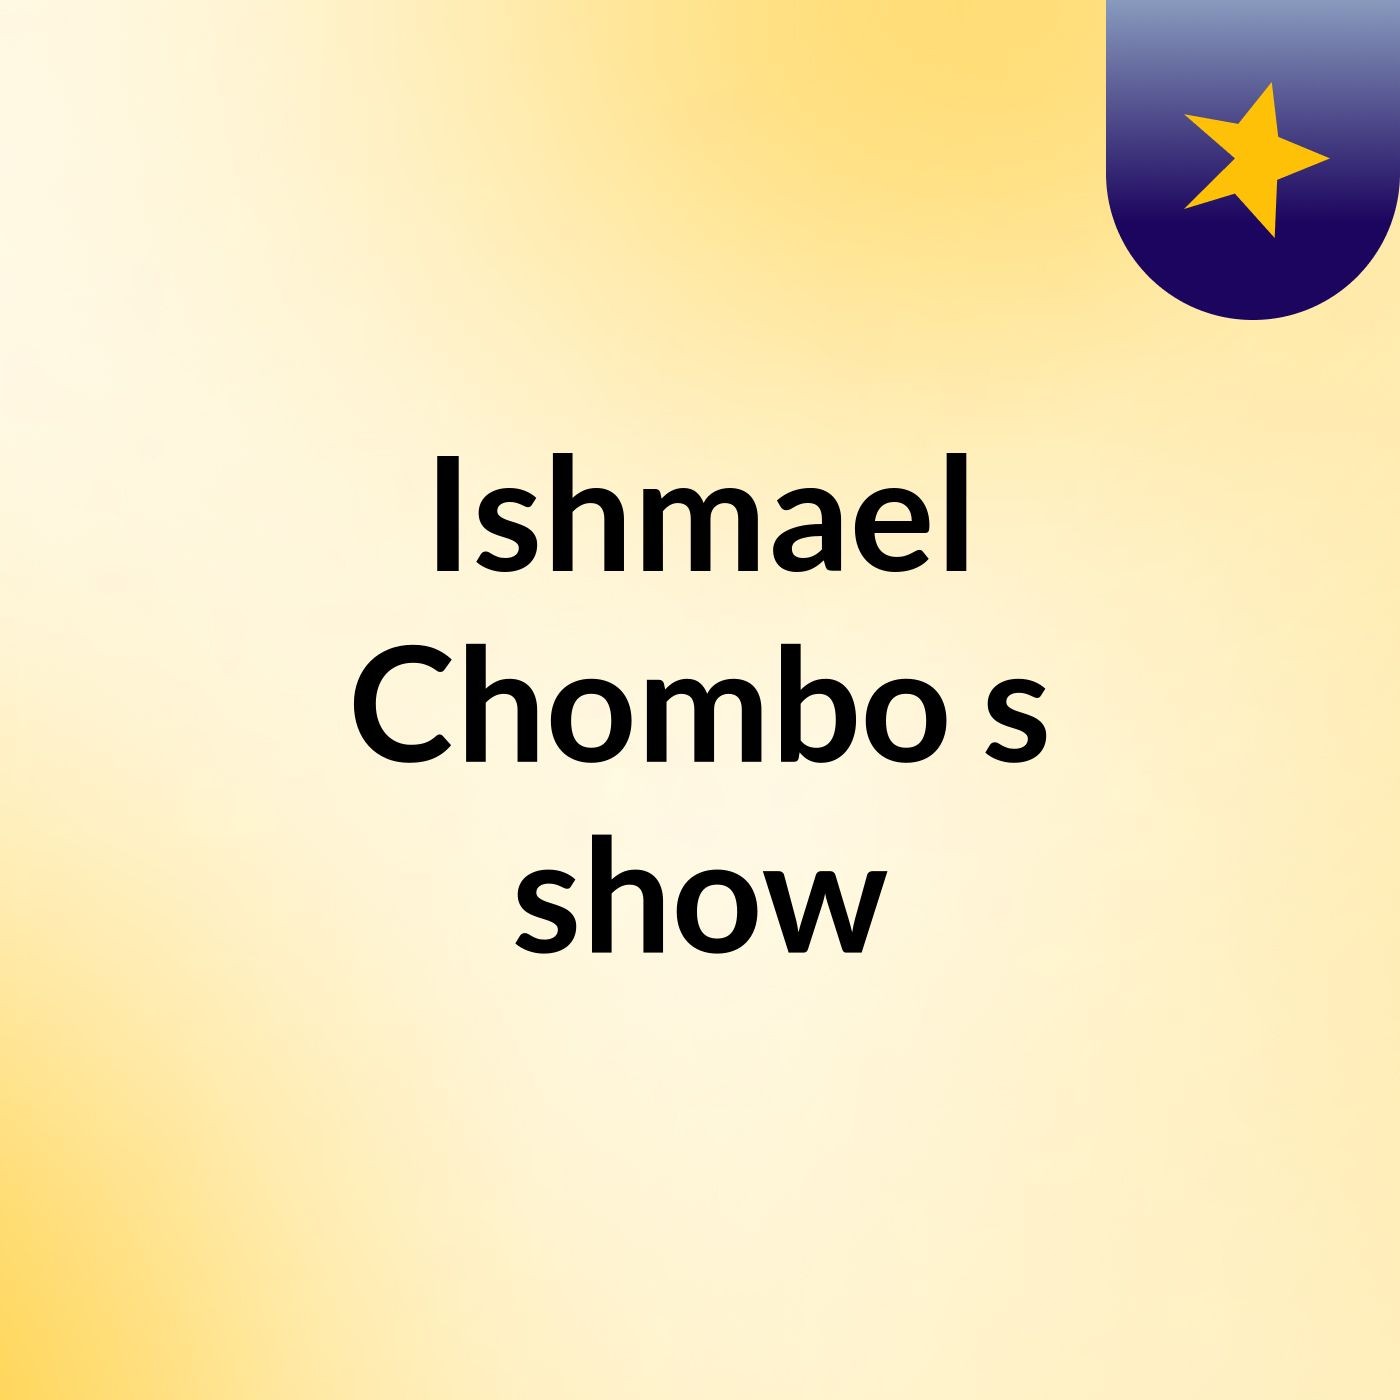 Ishmael Chombo's show